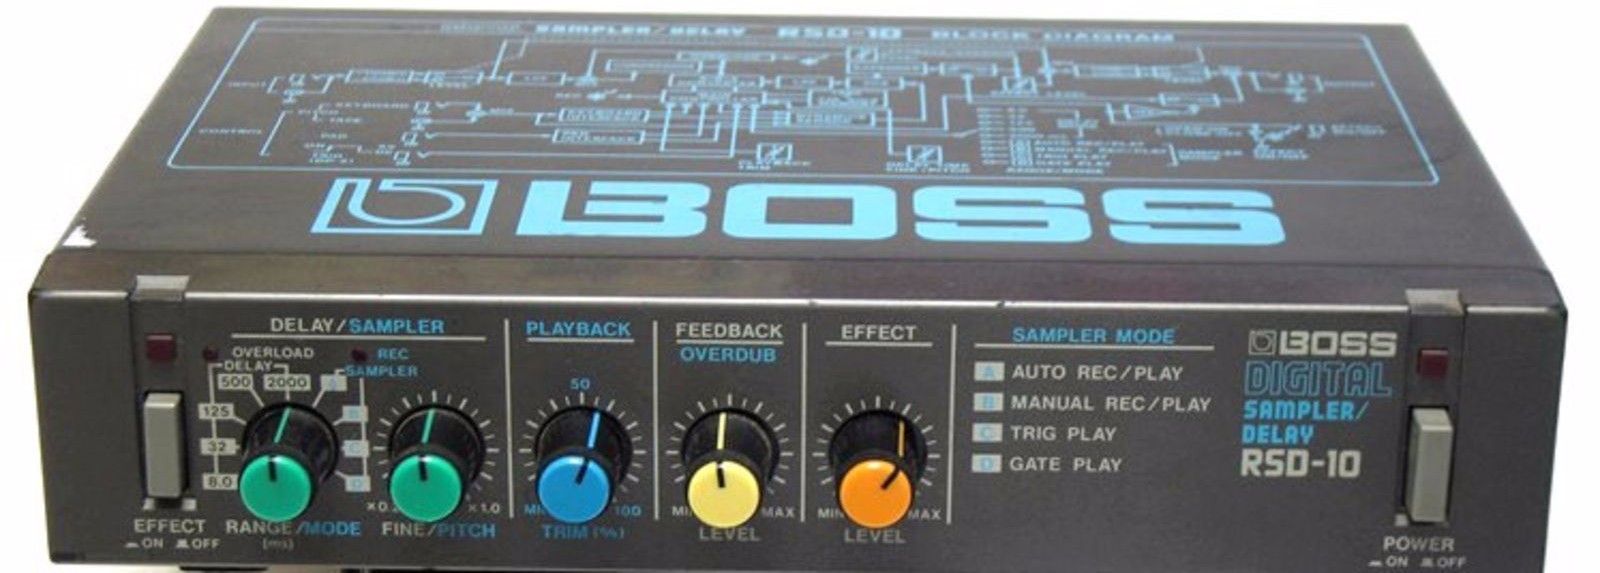 boss-rsd-10-digital-sampler-delay-90280.jpg